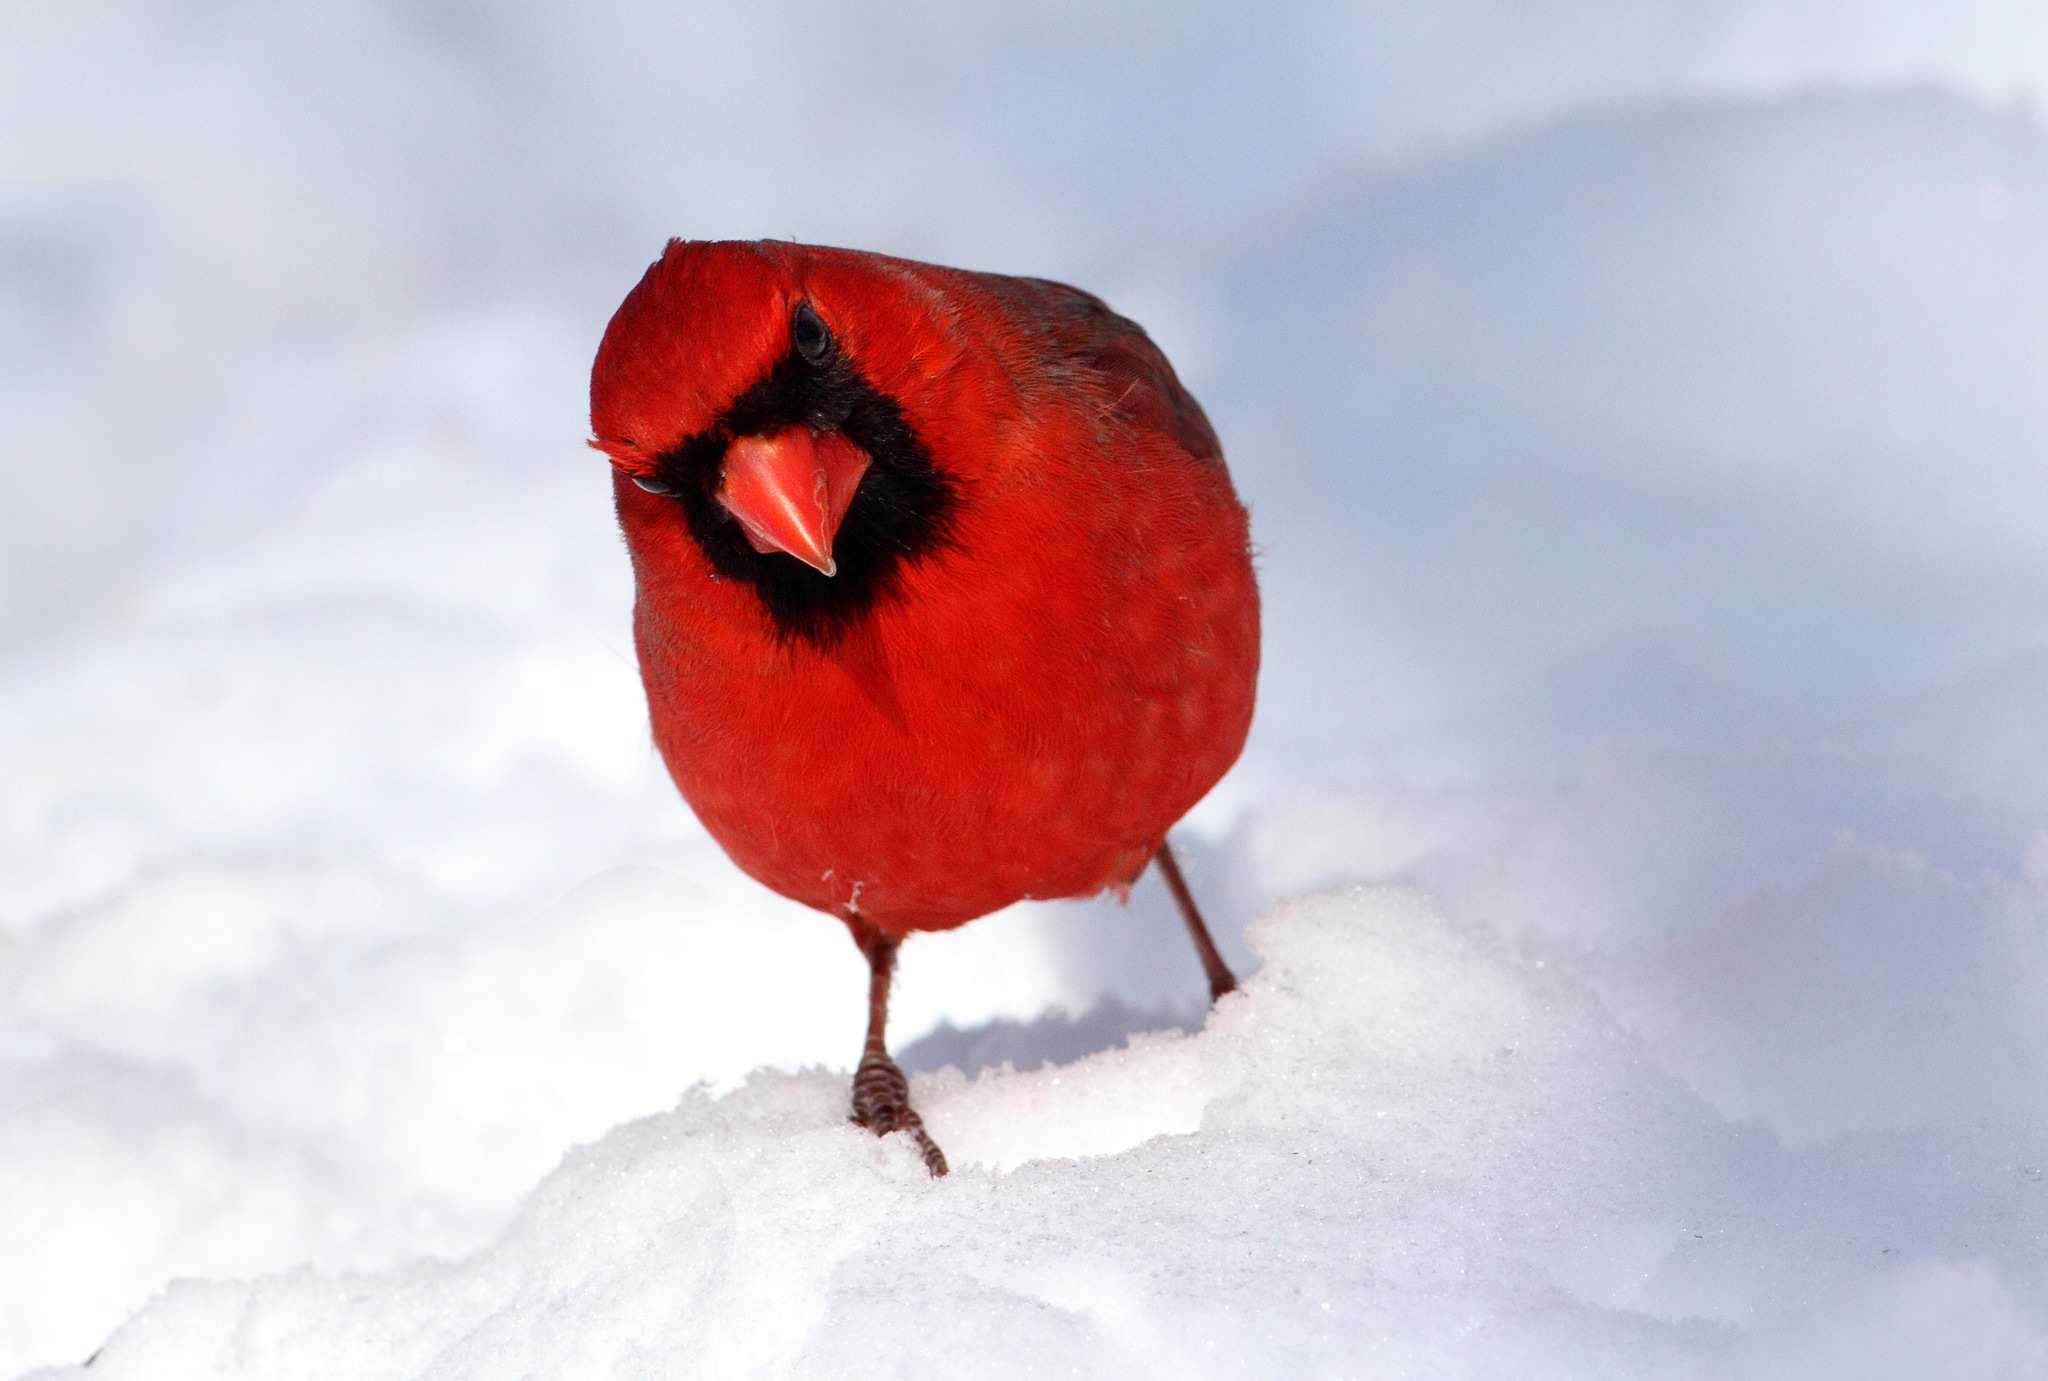 Cold bird. Красная птица. Кардинал птица. Красная птичка на снегу. Птица с красным вокруг глаз.